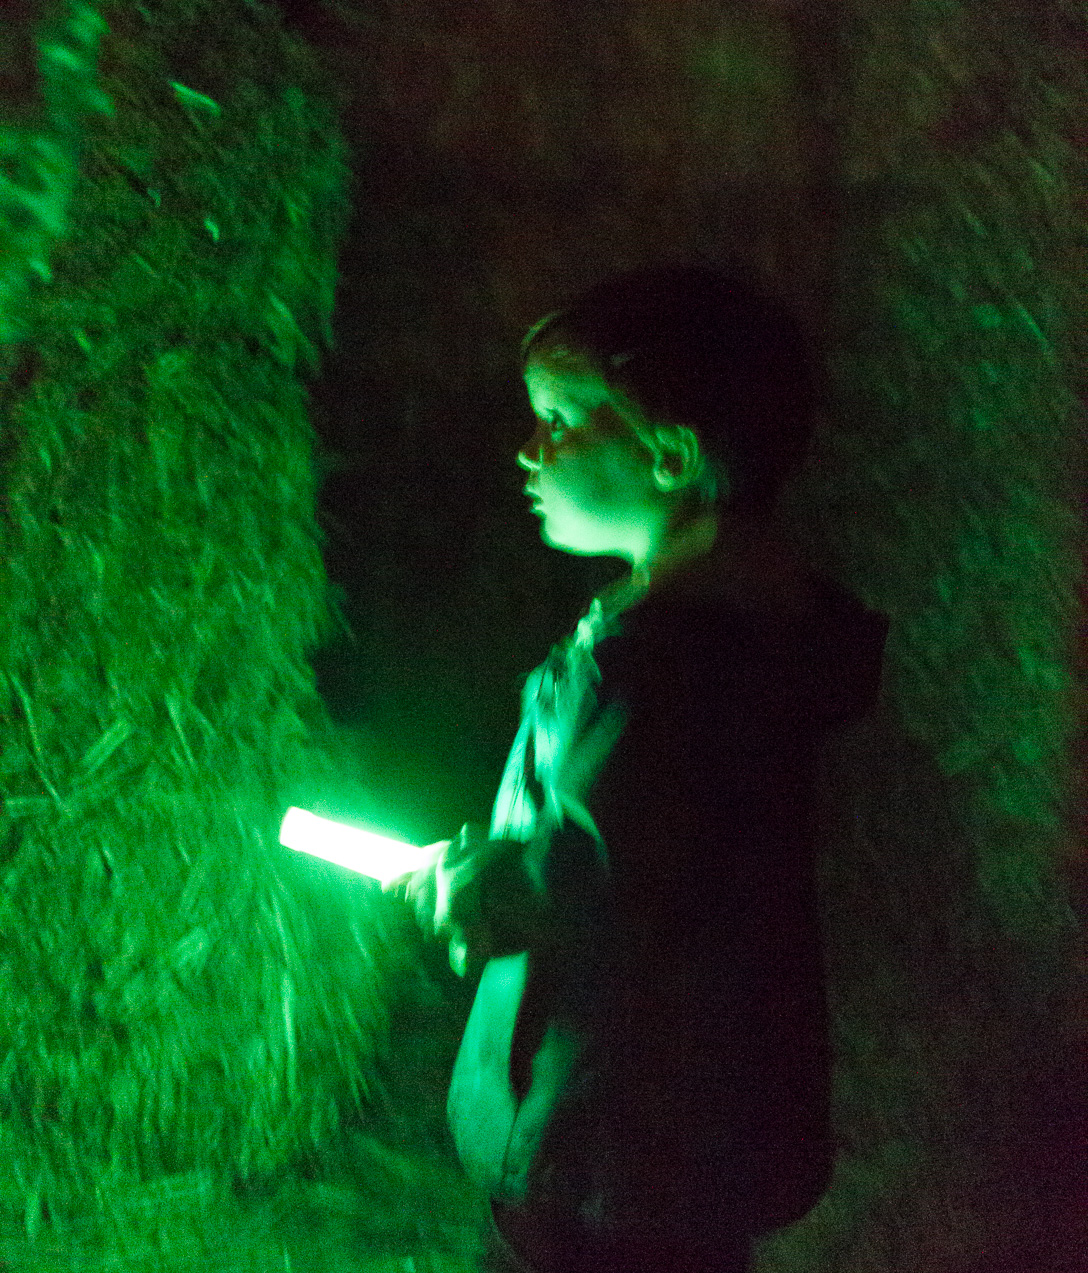  October 14, 2012 - In the dark - haybale maze